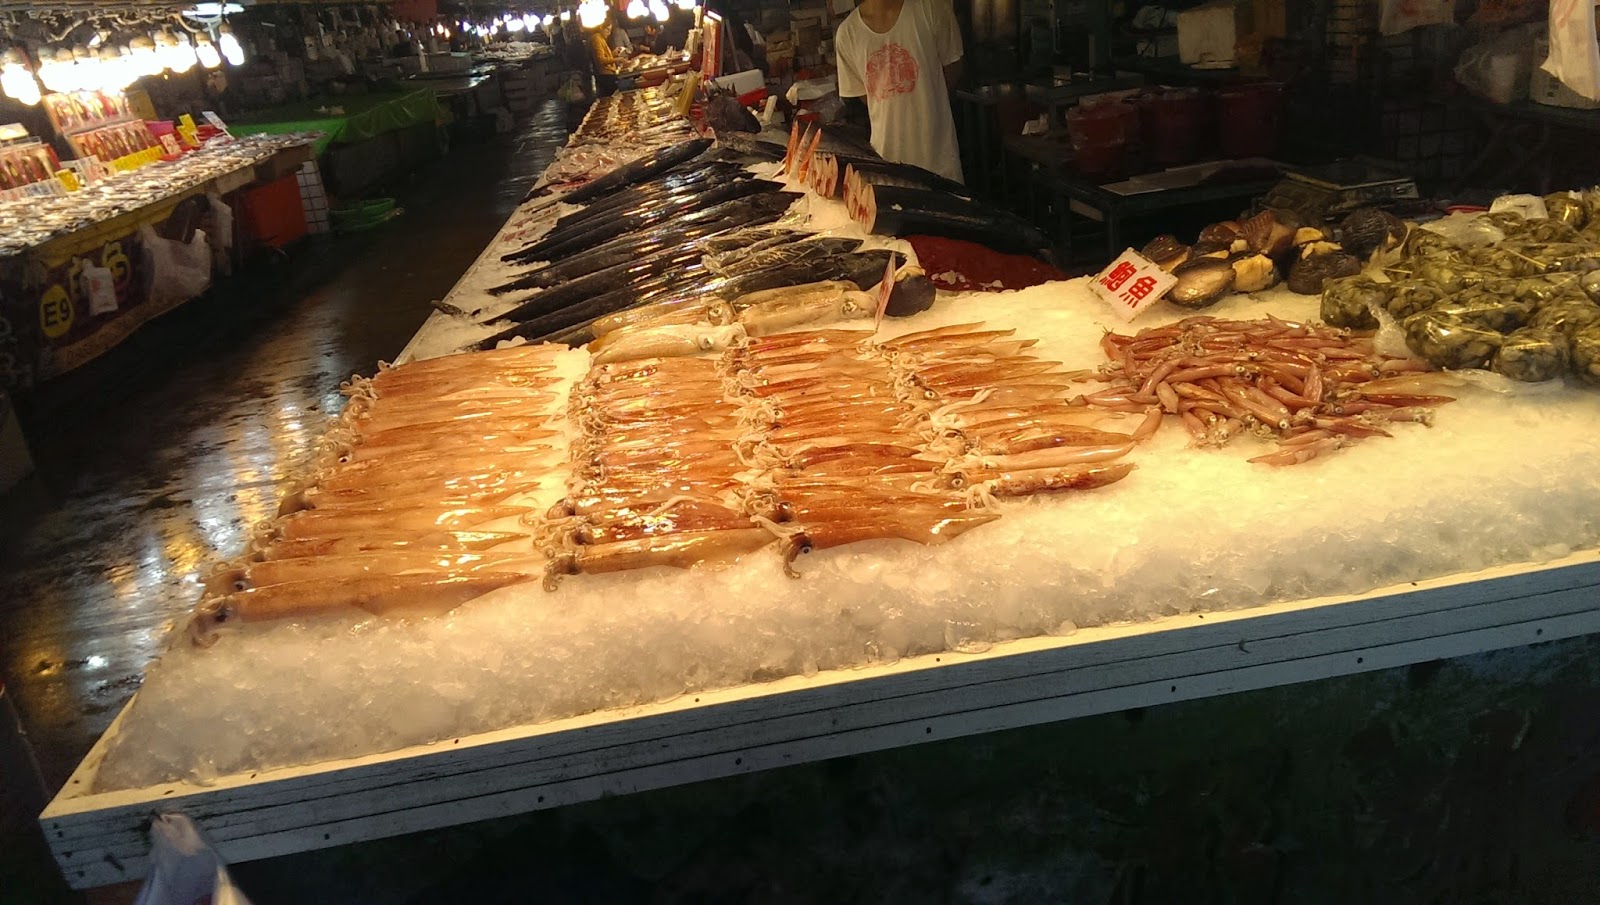 2015 02 02%2B11.55.59 - [食記] 葉家生魚片 - 布袋觀光漁市中的鮮魚餐廳